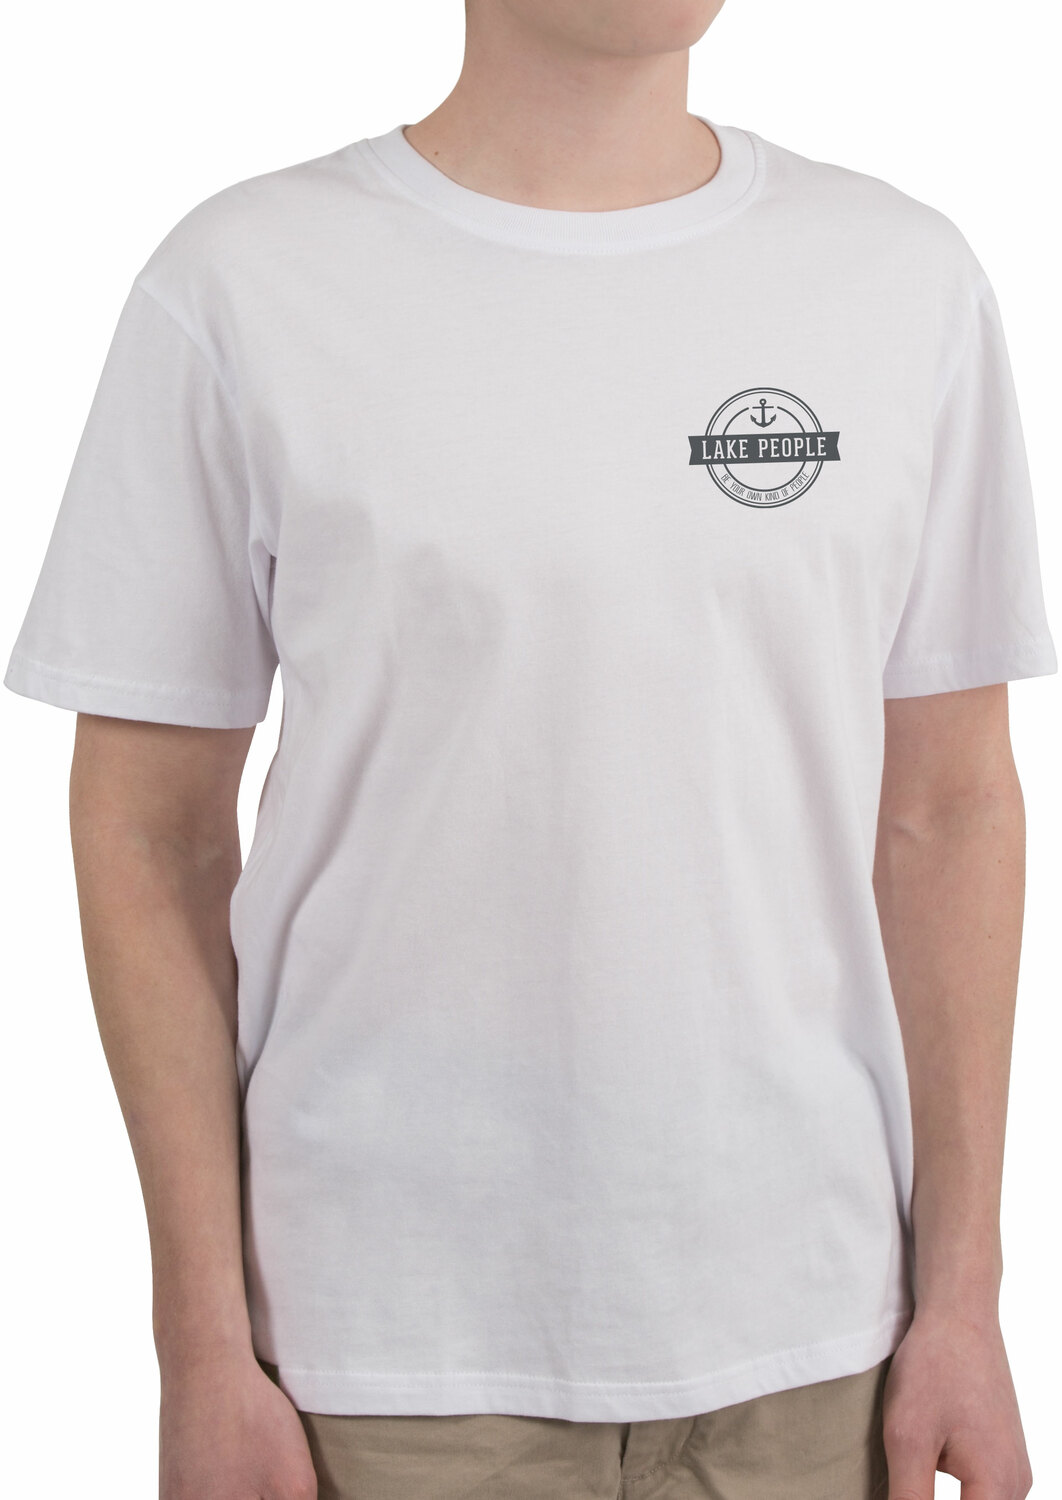 Lake People by We People - Lake People - Double Extra Large White Unisex T-Shirt